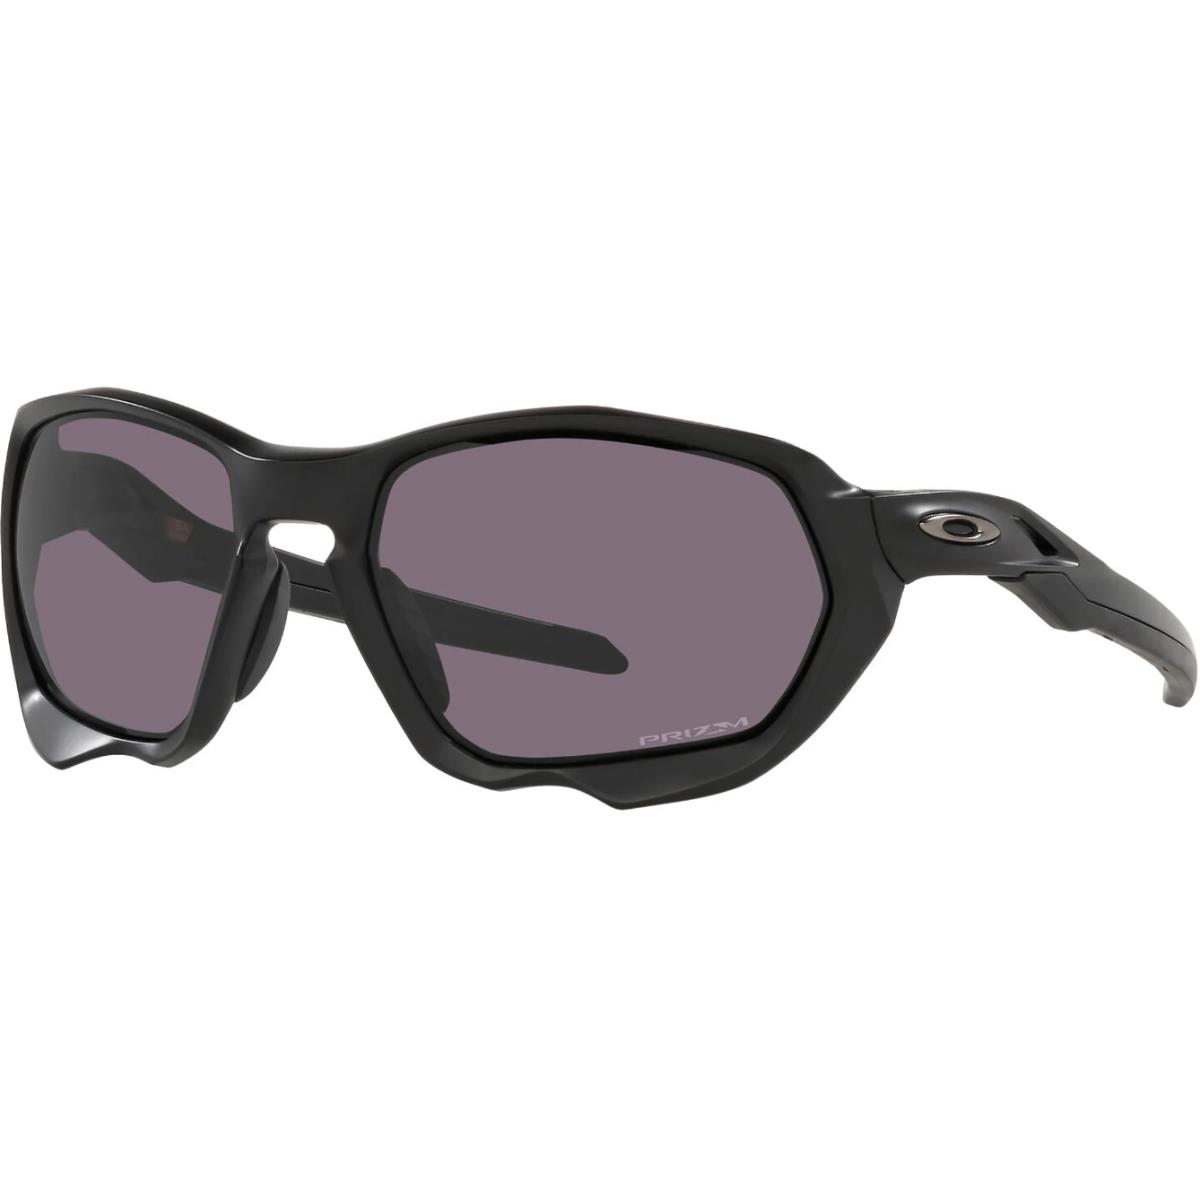 Oakley Plazma Prizm Grey Lens Matte Black Frame Sunglasses OO9019-01 59 - Black Frame, Prizm Grey Lens